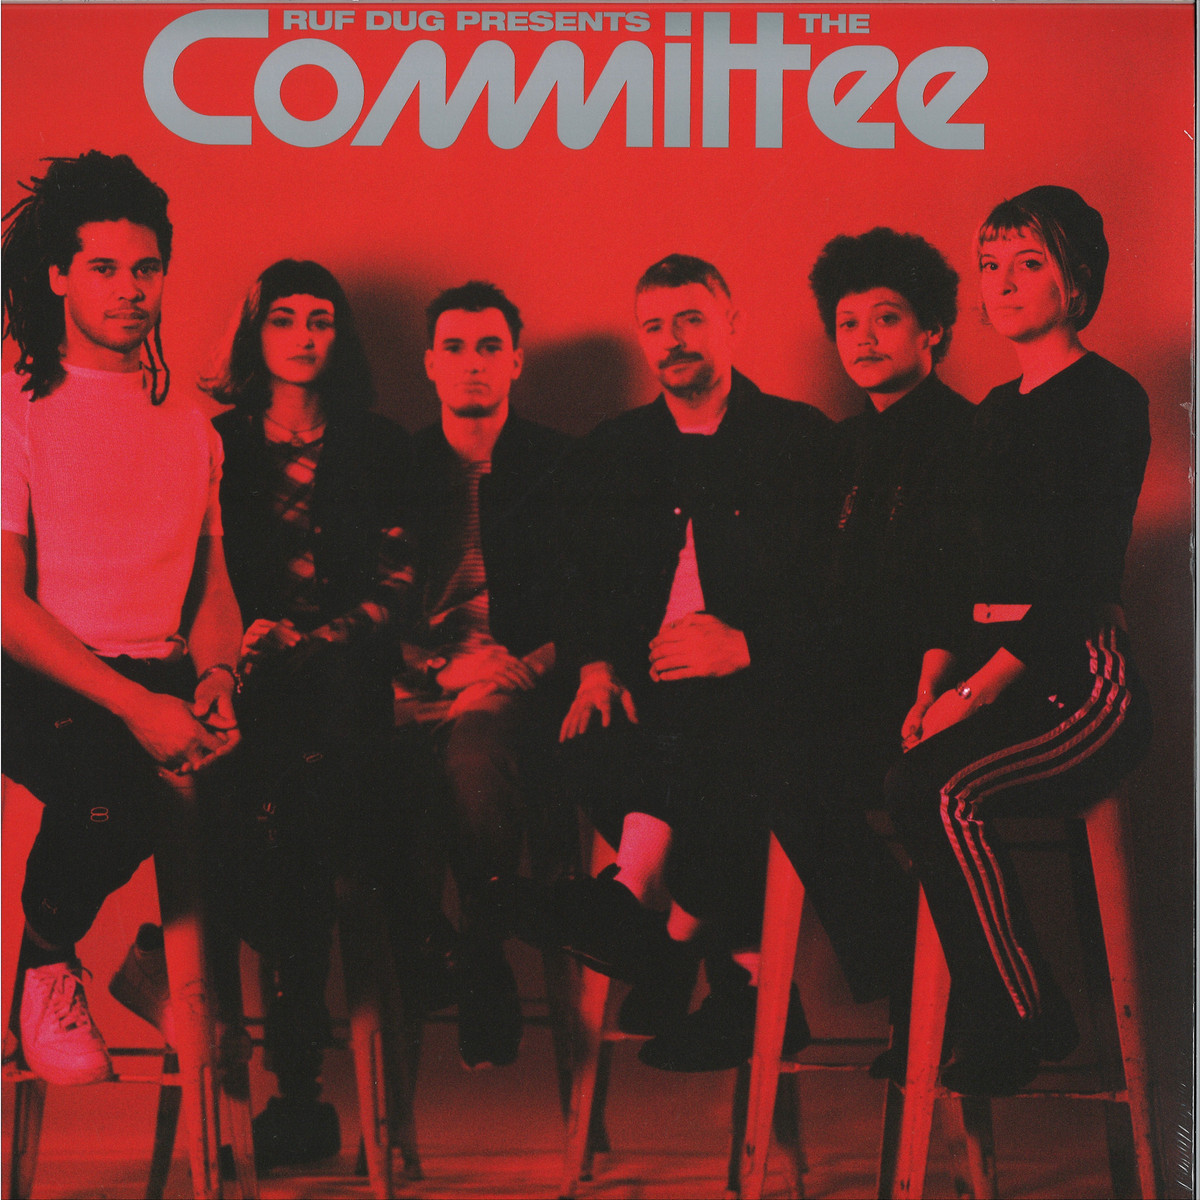 Ruf Dug - Ruf Dug presents The Committee / Rhythm Section International  RS026 - Vinyl